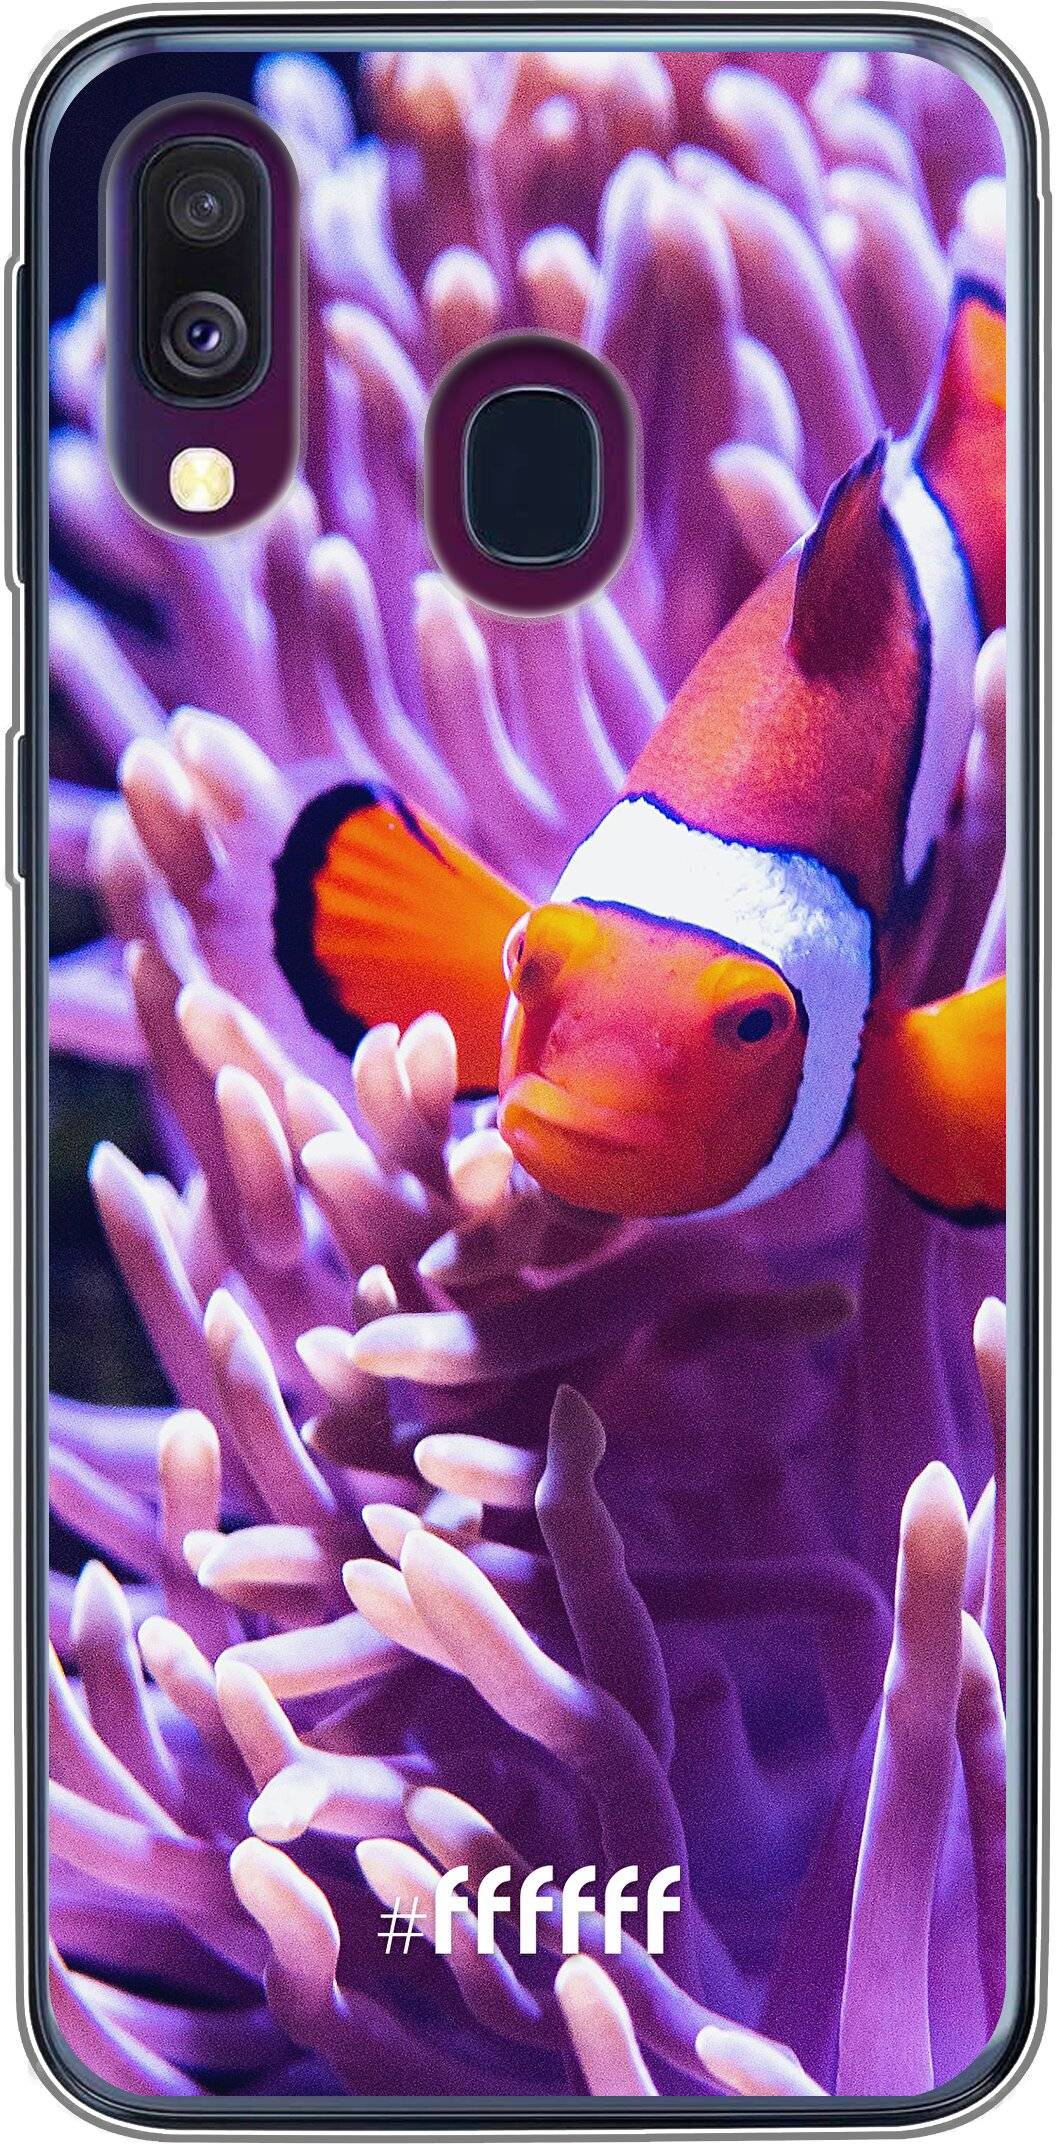 Nemo Galaxy A50